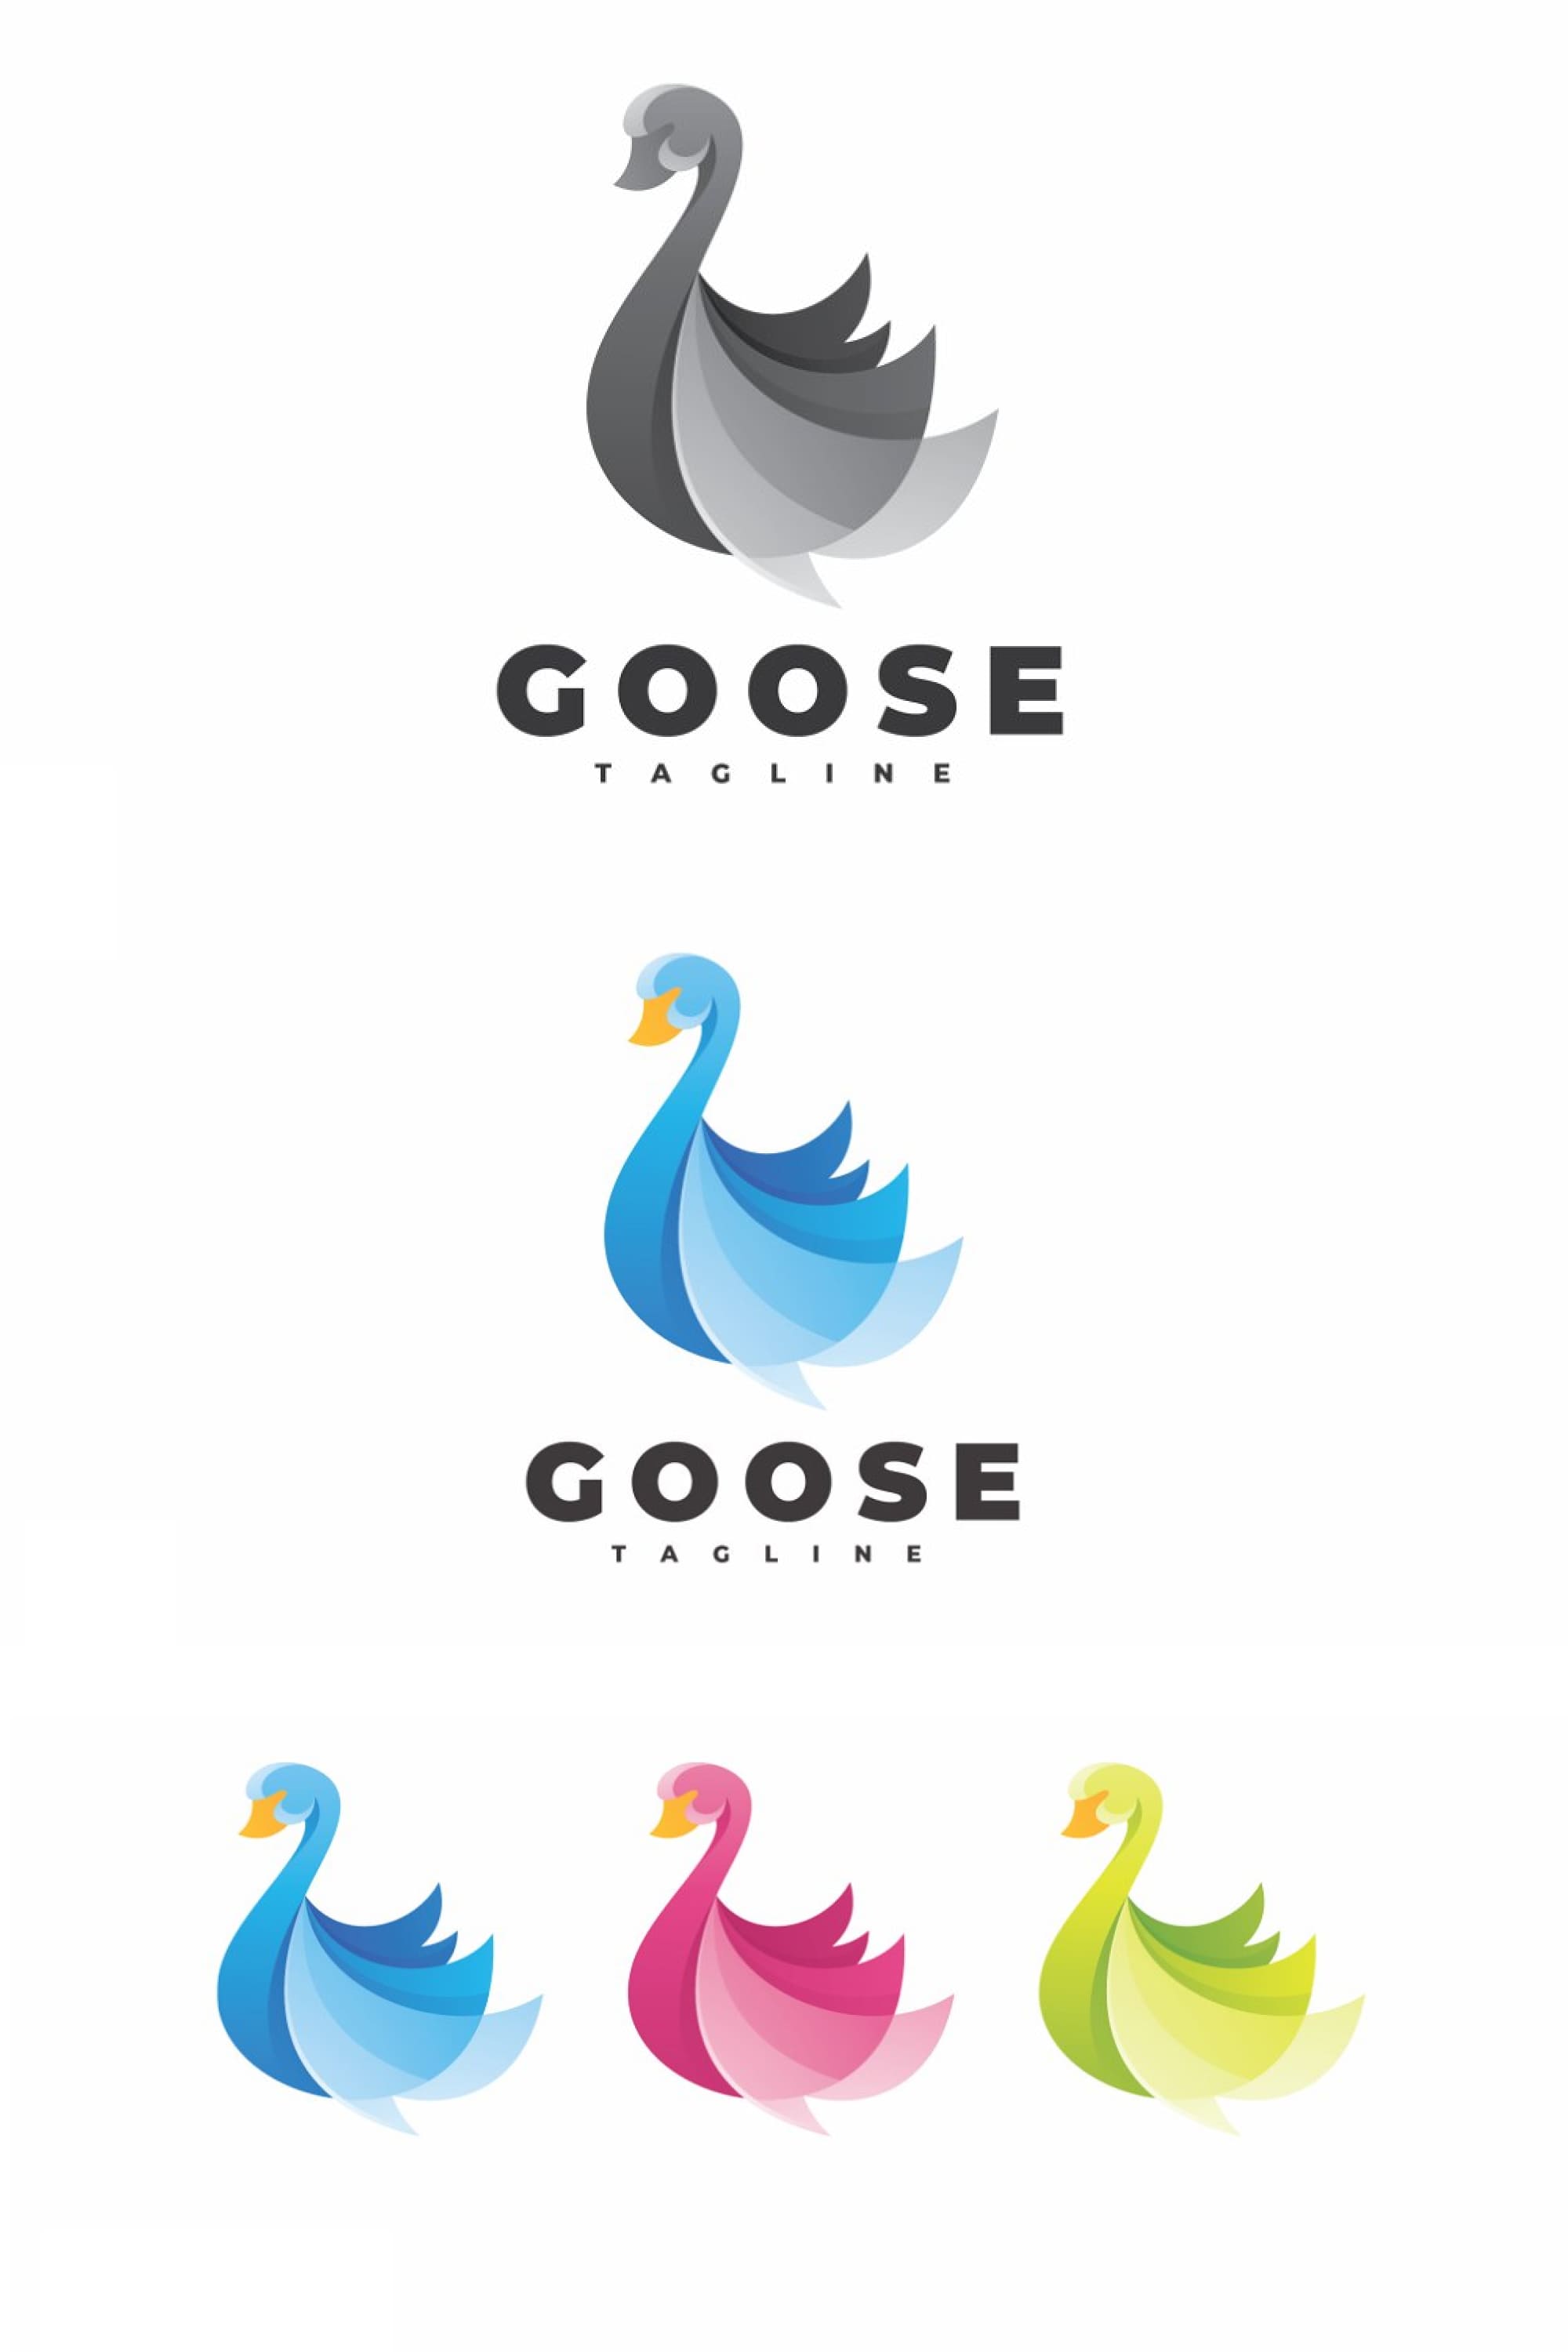 swan goose logo template pinteres 2